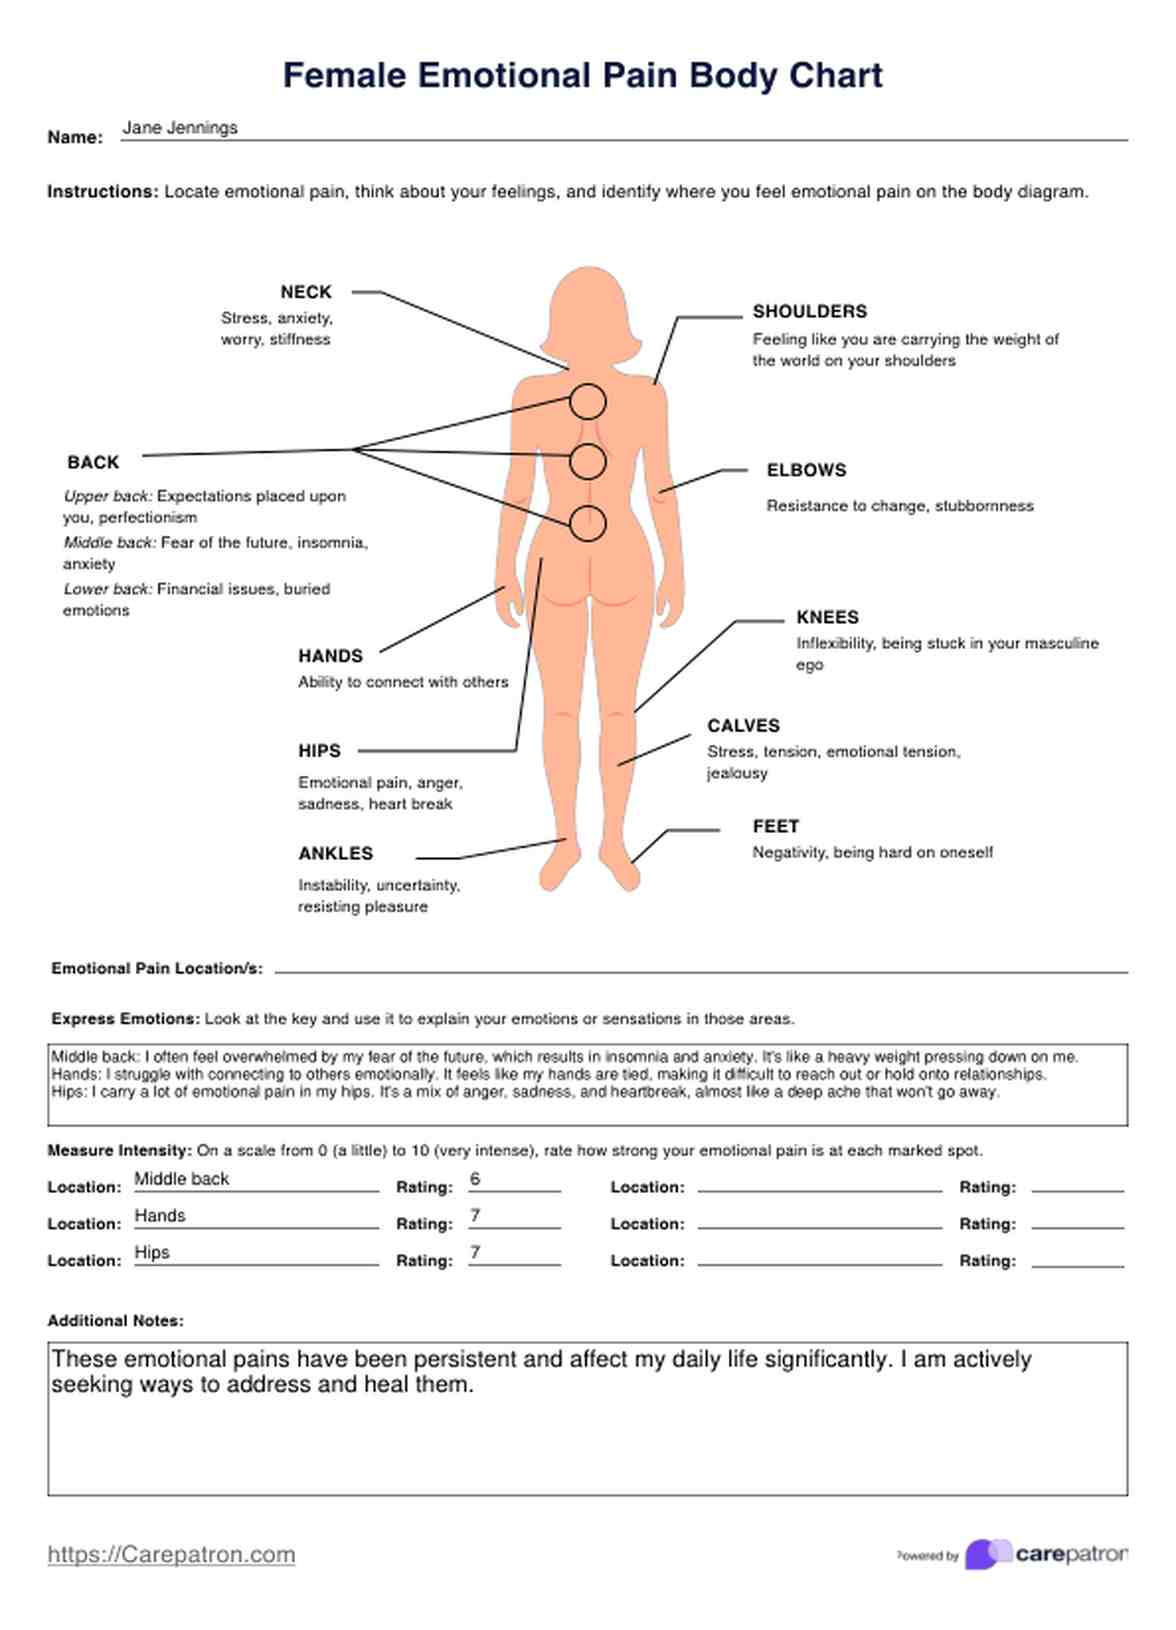 Female Emotional Pain Body Charts PDF Example